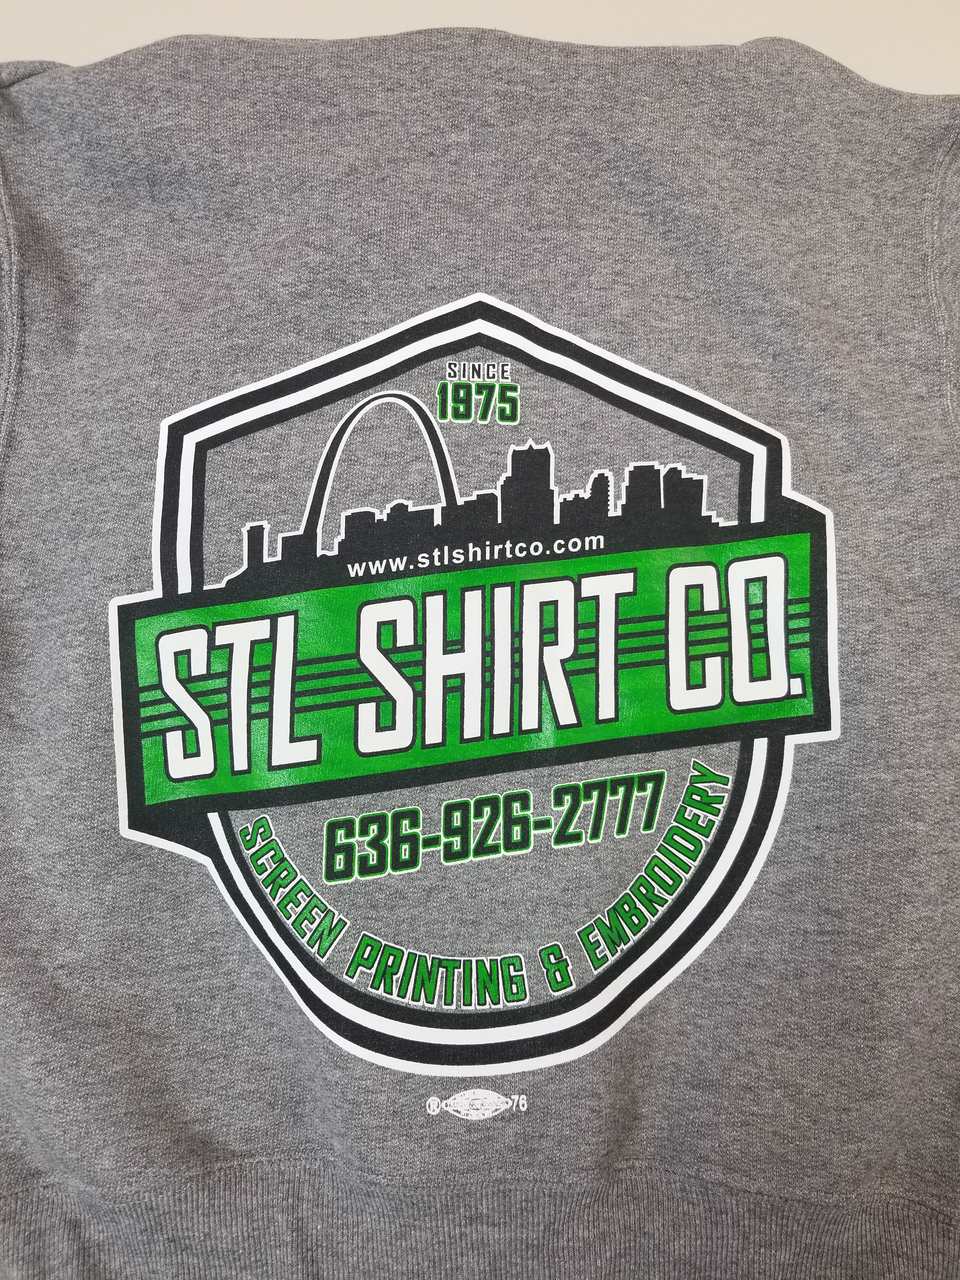 Rush T-Shirt Orders Rockford, IL | Custom T-Shirts | STL Shirt Co.